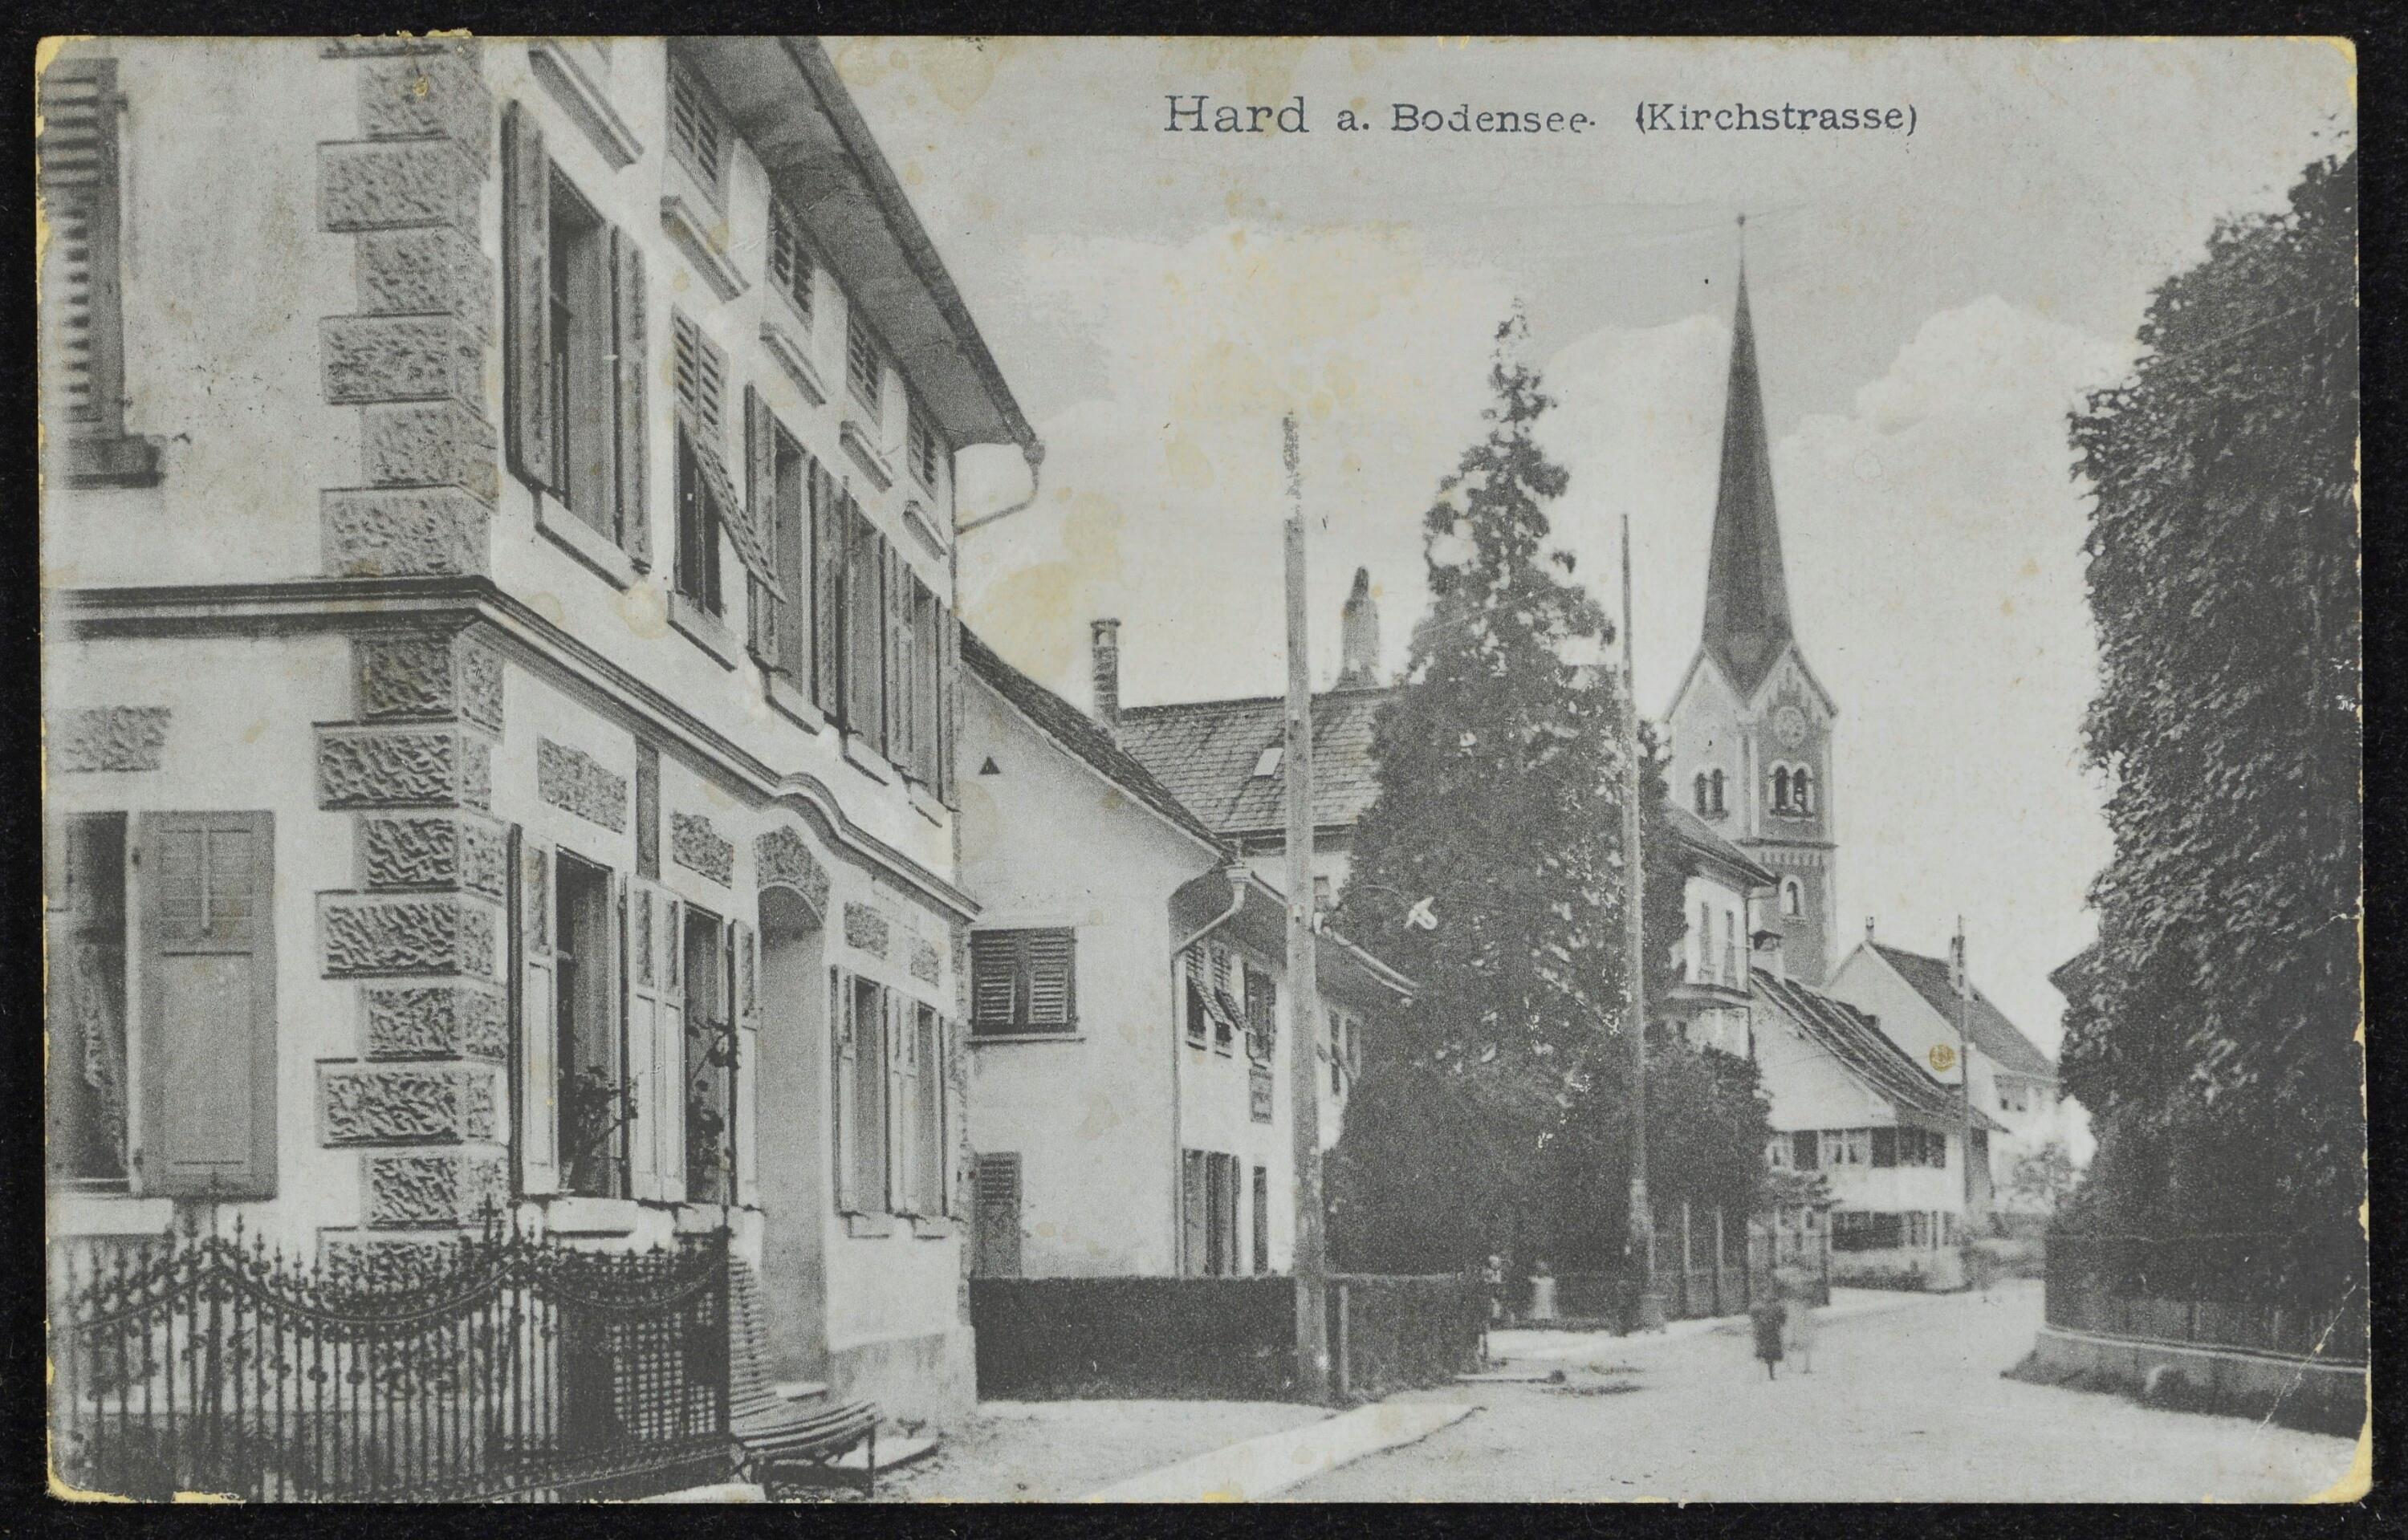 Hard a. Bodensee (Kirchstrasse)></div>


    <hr>
    <div class=